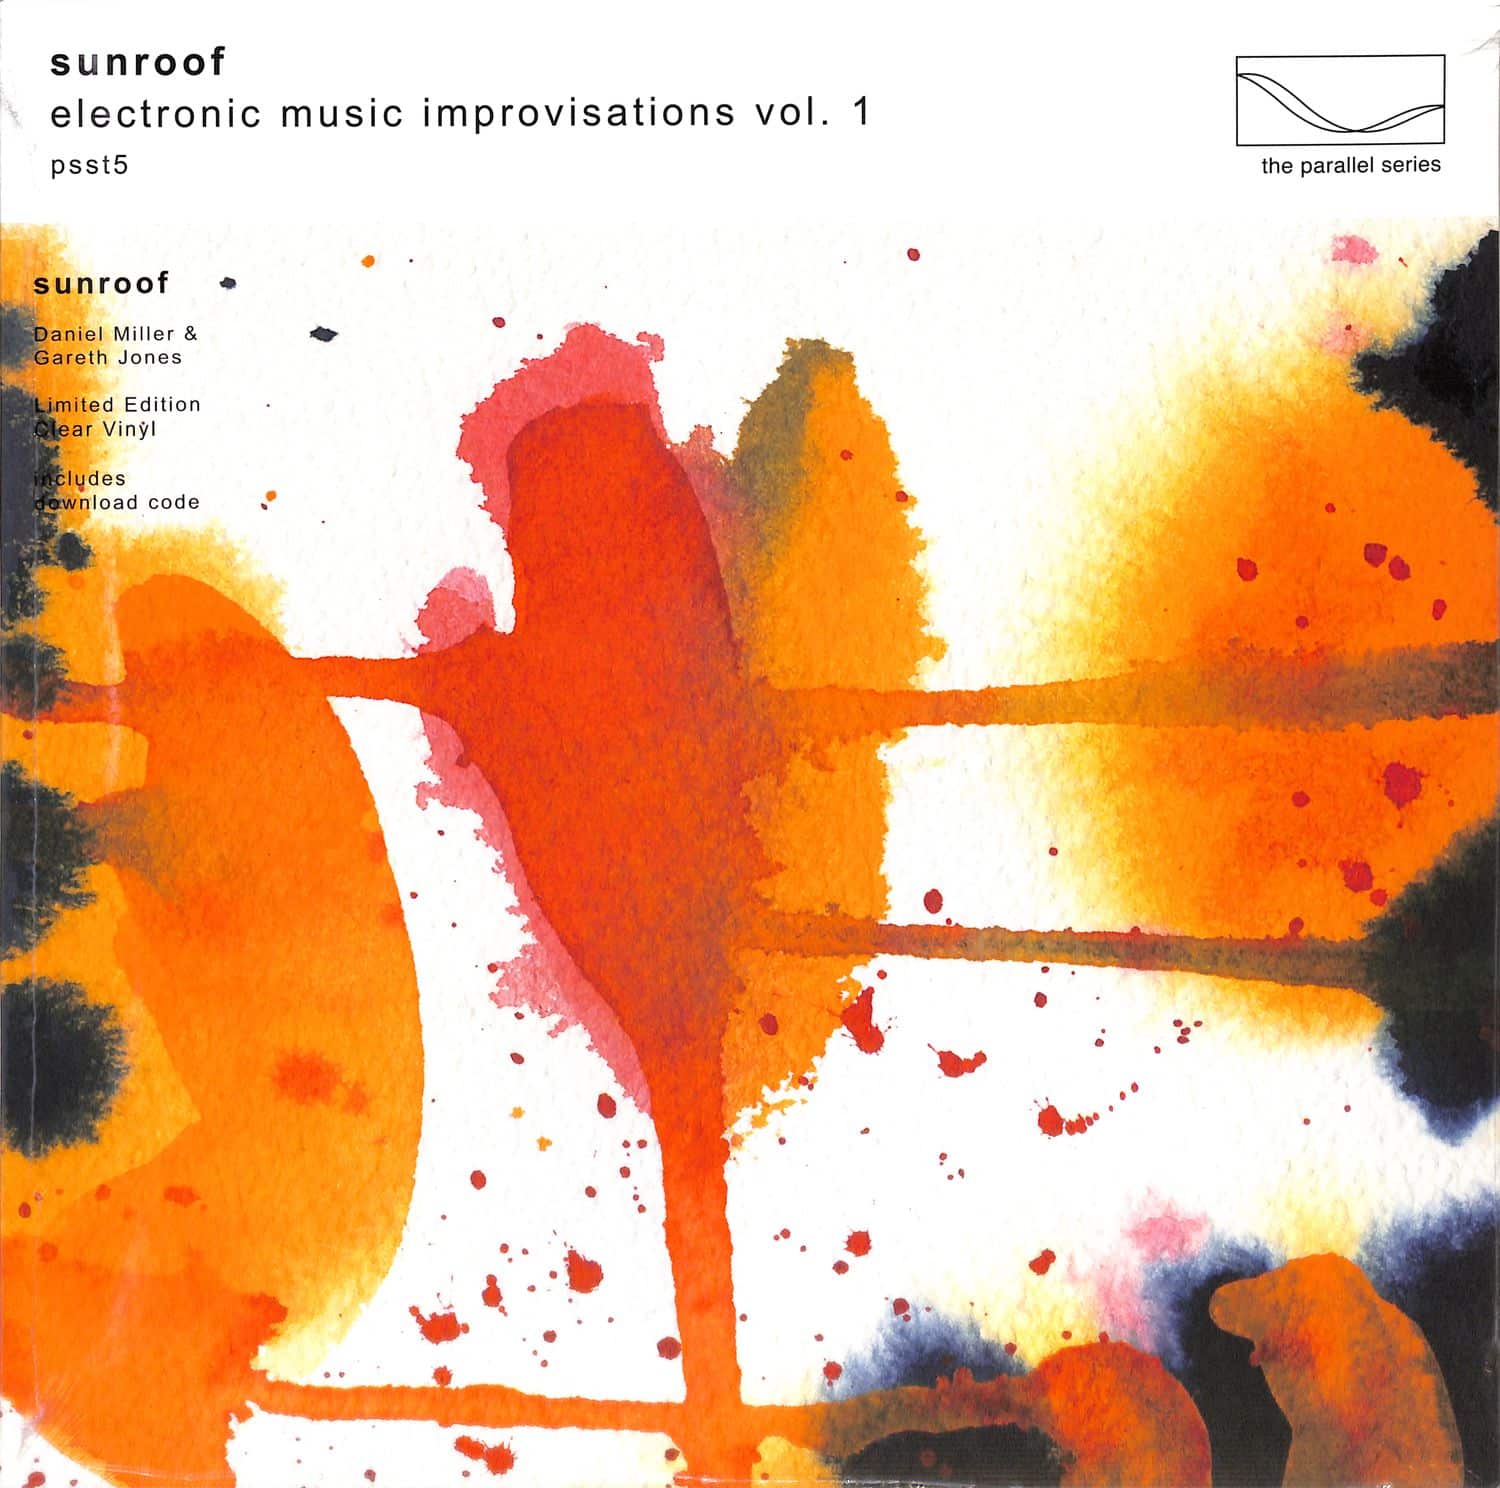 Sunroof - ELECTRONIC MUSIC IMPROVISATIONS VOL. 1 